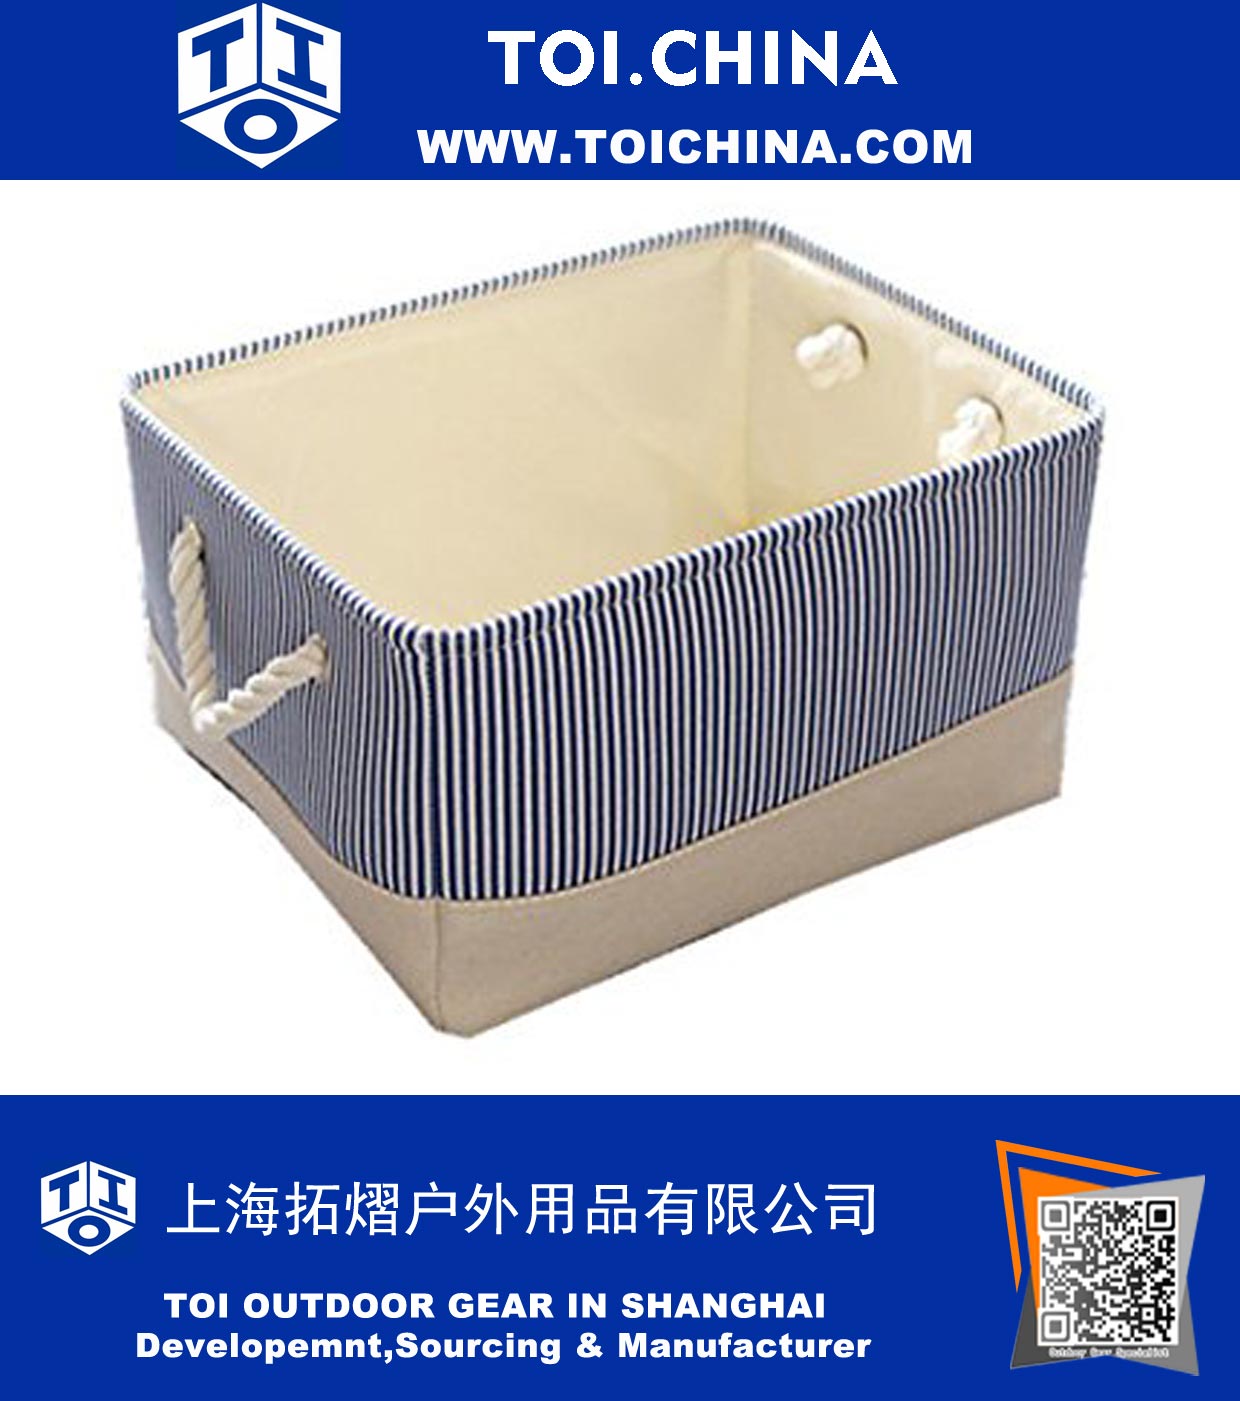 Home Blue Canvas Basket,Fabric Storage Bin